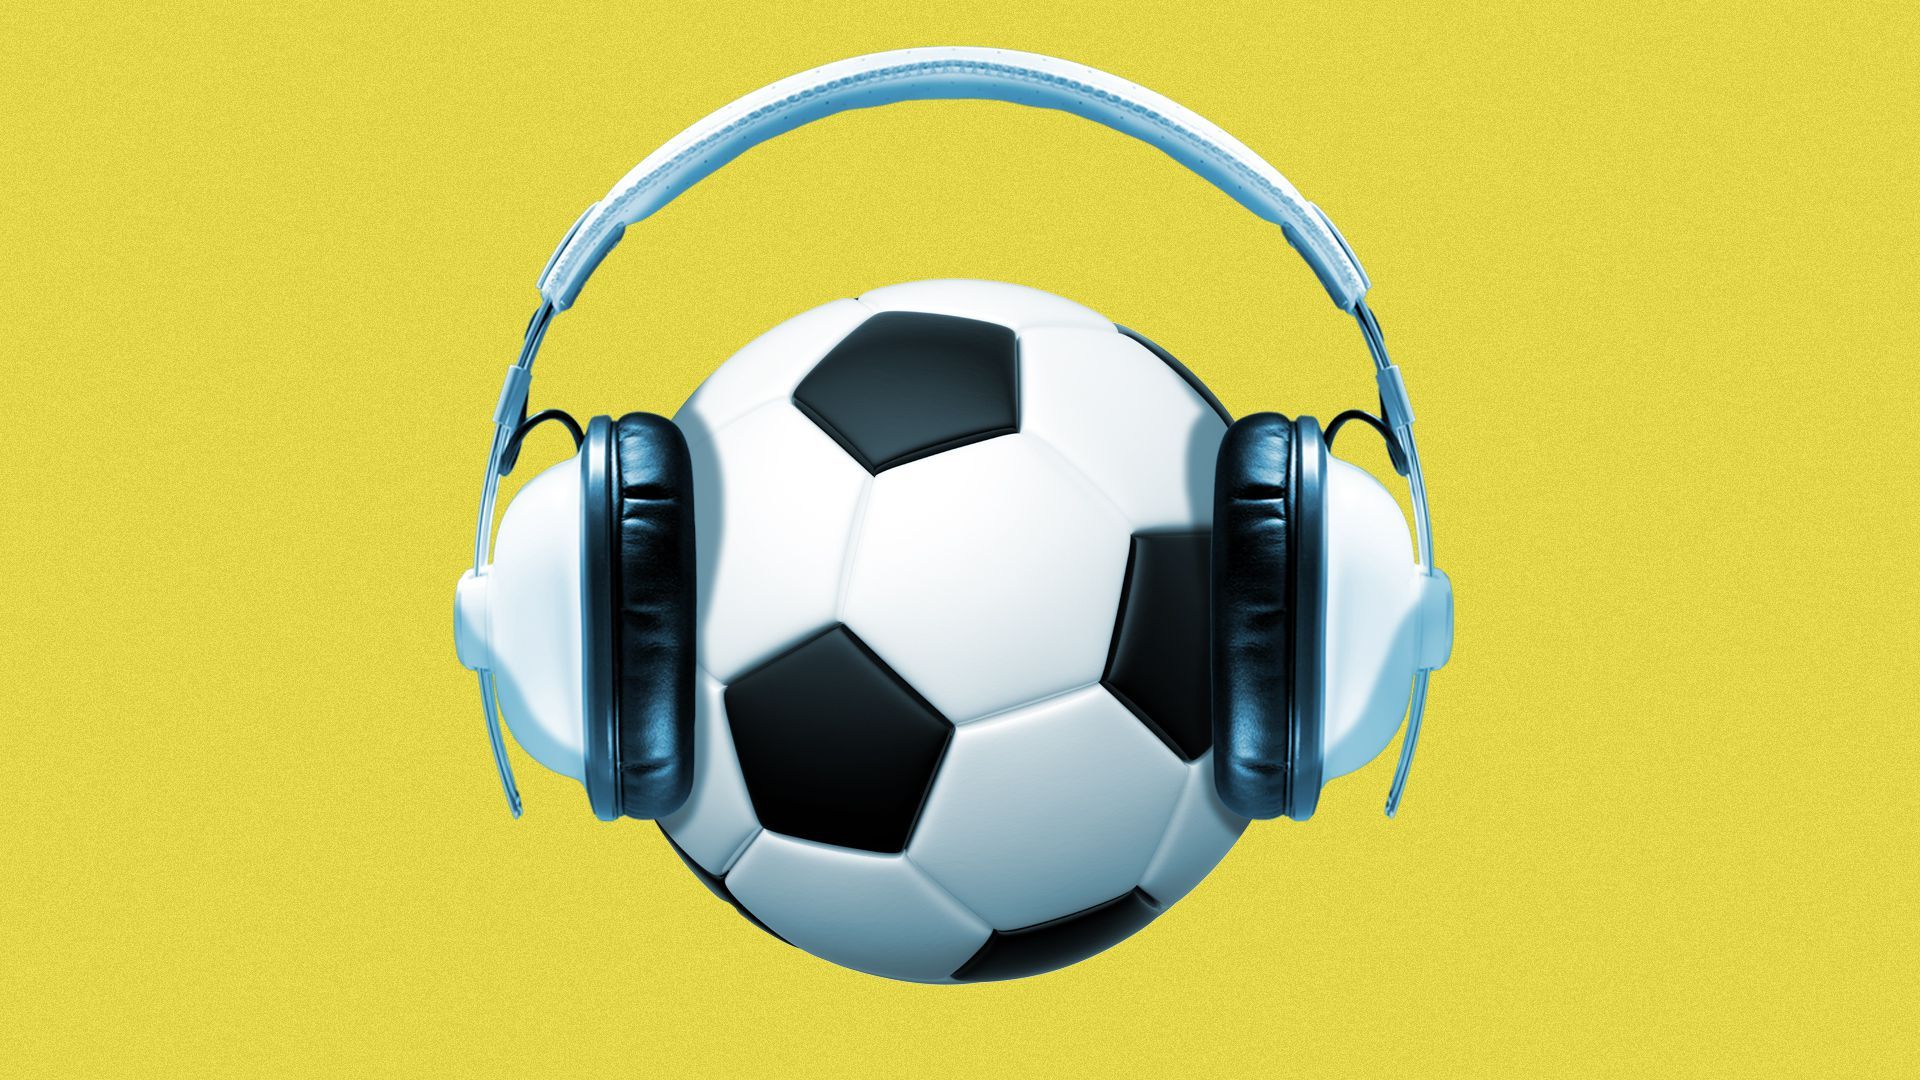 Illustration of a soccer ball wearing headphones